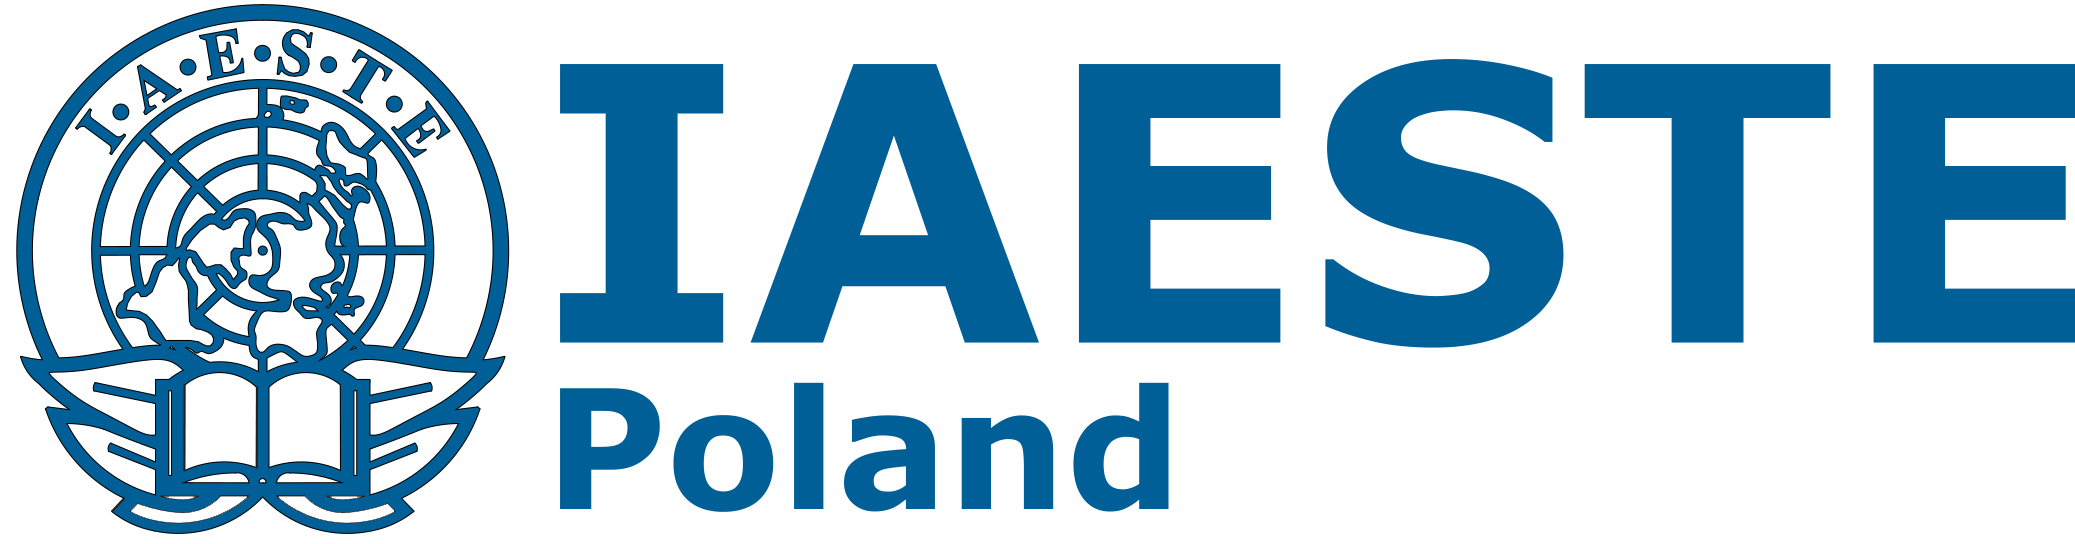 IAESTEPolska logo